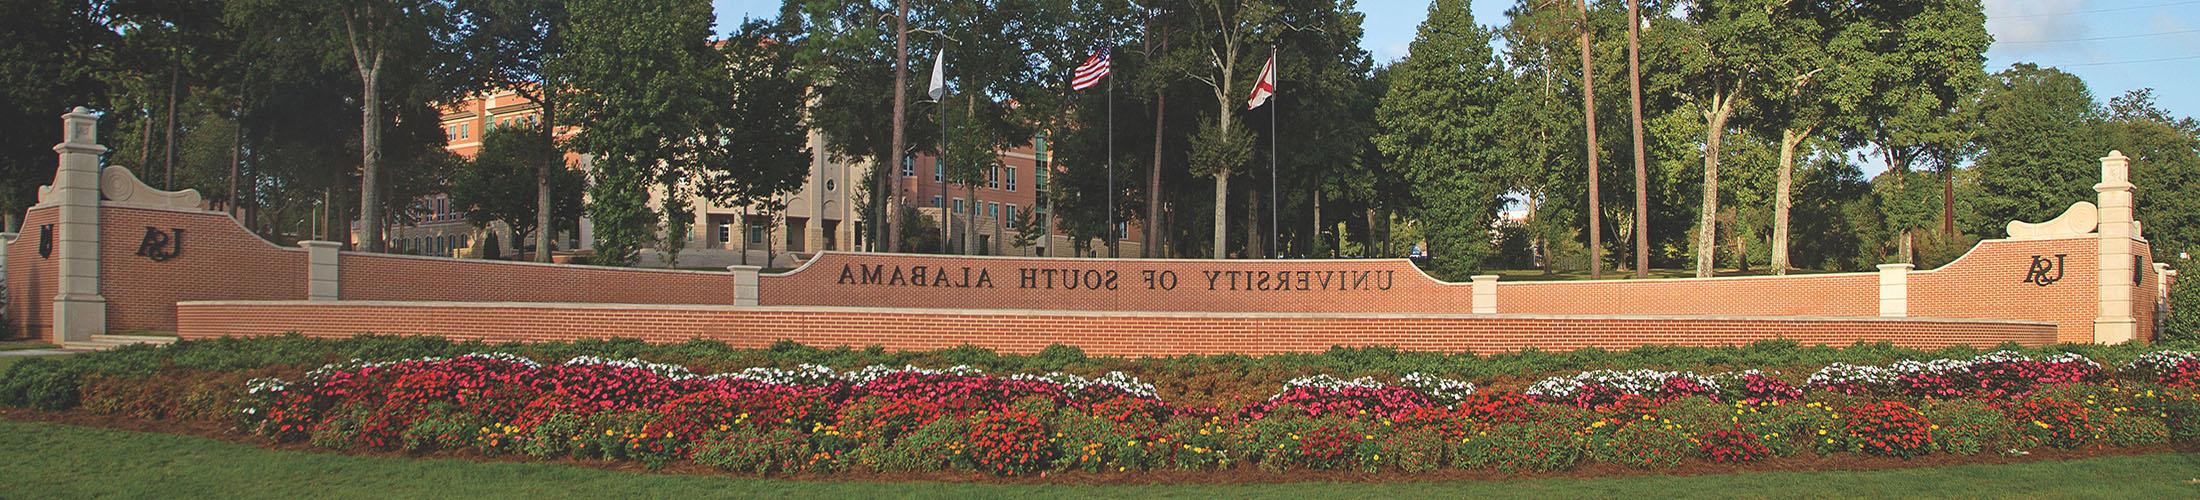 University of South Alabama Street Sign.